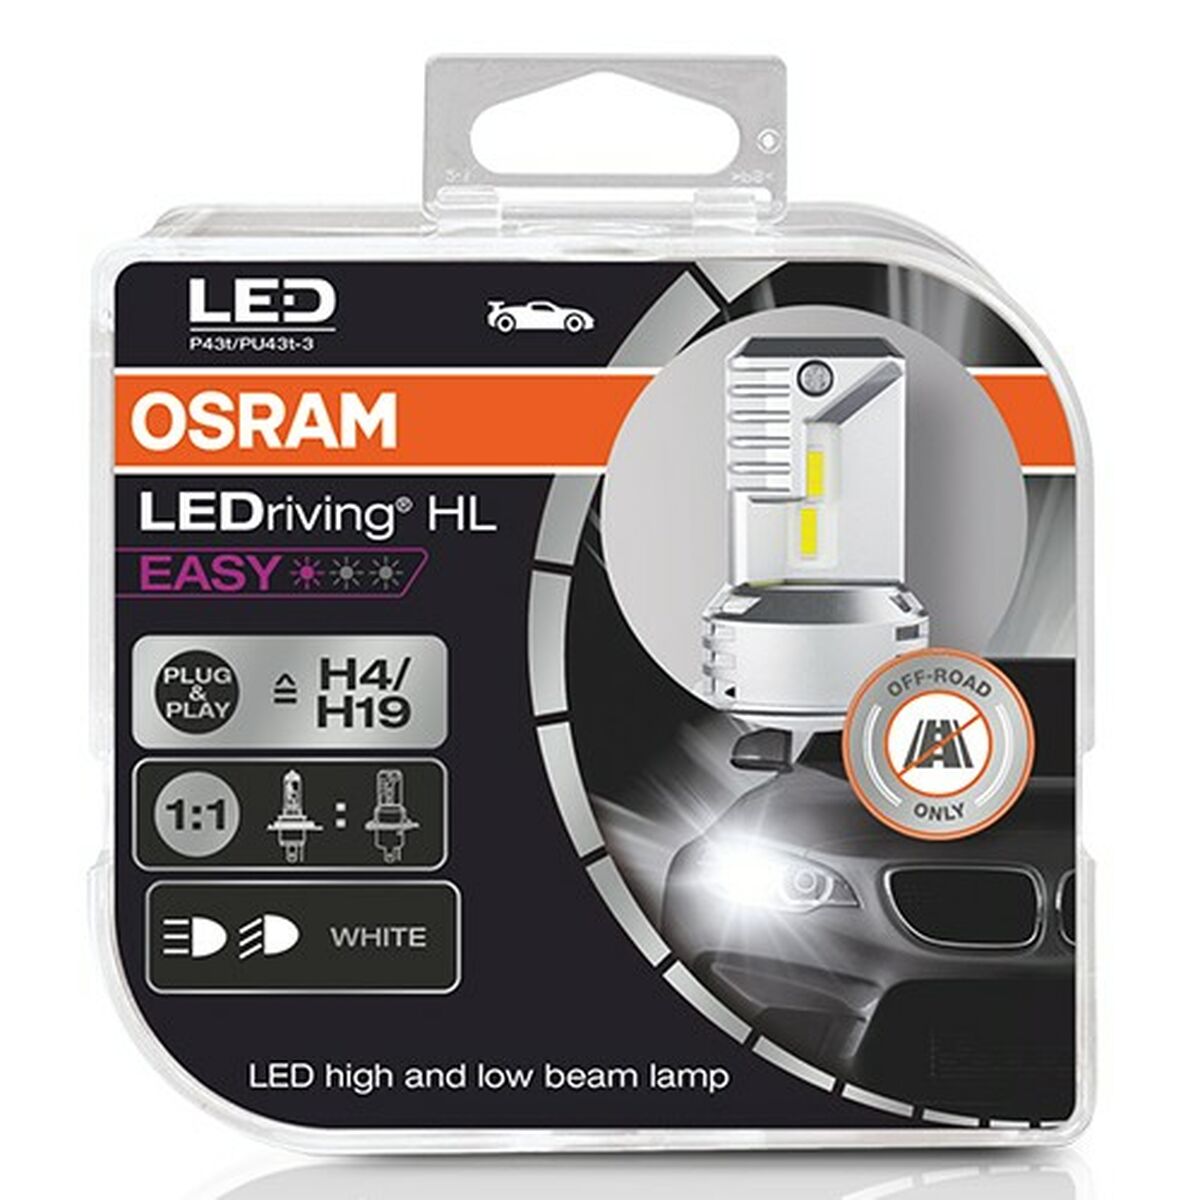 Osta tuote Autopolttimo Osram LEDriving HL Easy H4 16 W 12 V verkkokaupastamme Korhone: Urheilu & Vapaa-aika 10% alennuksella koodilla KORHONE